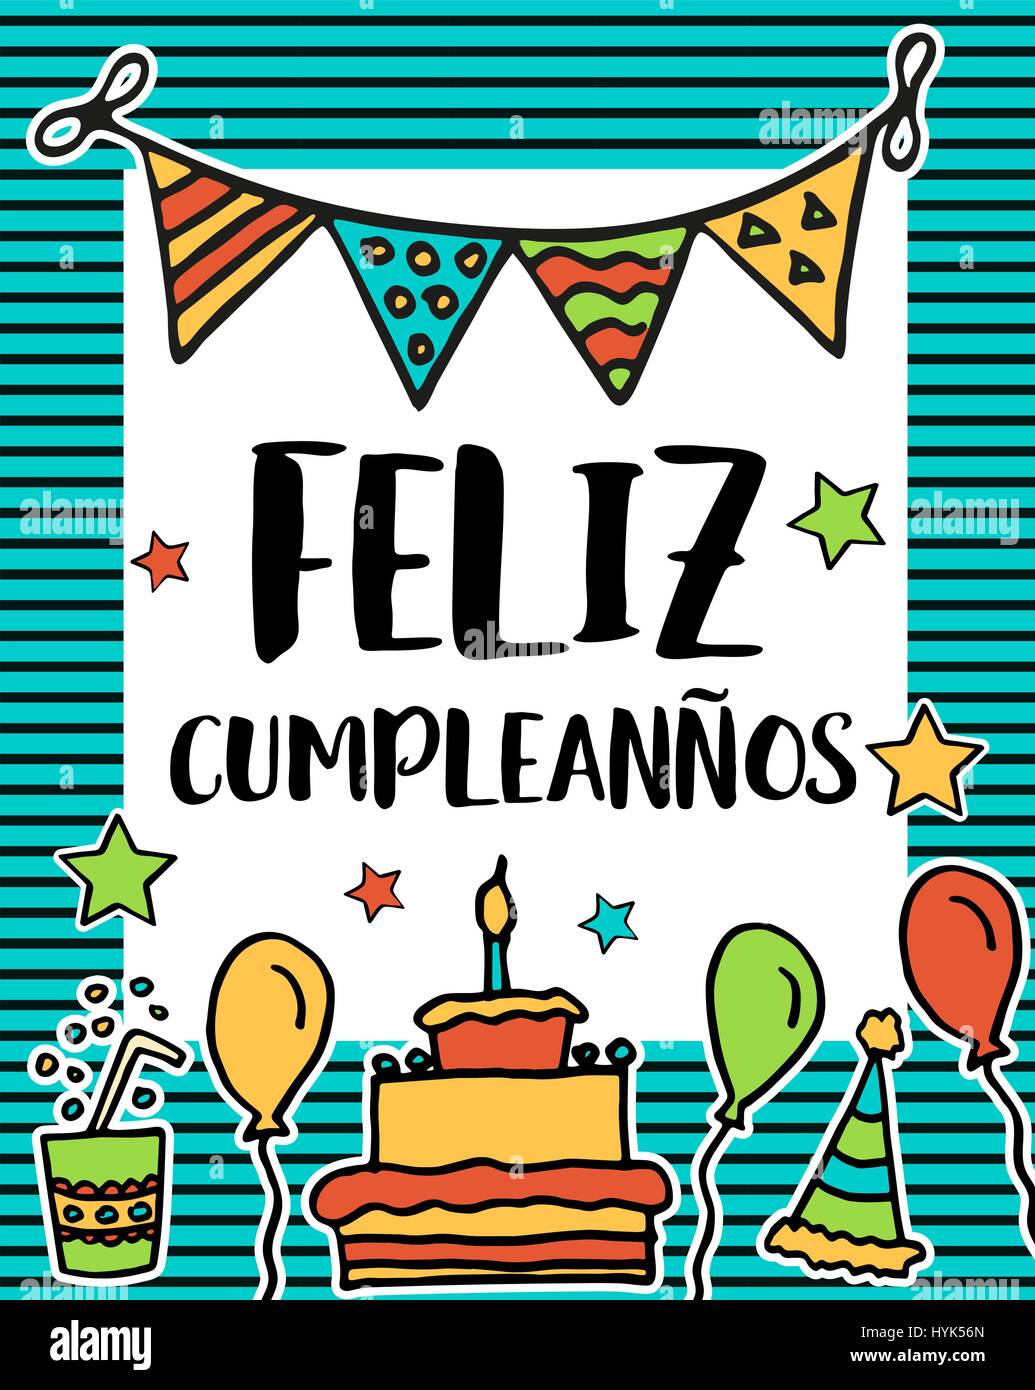 Feliz cumpleanos, happy birthday in spanish language, poster Stock Vector Image & Art - Alamy